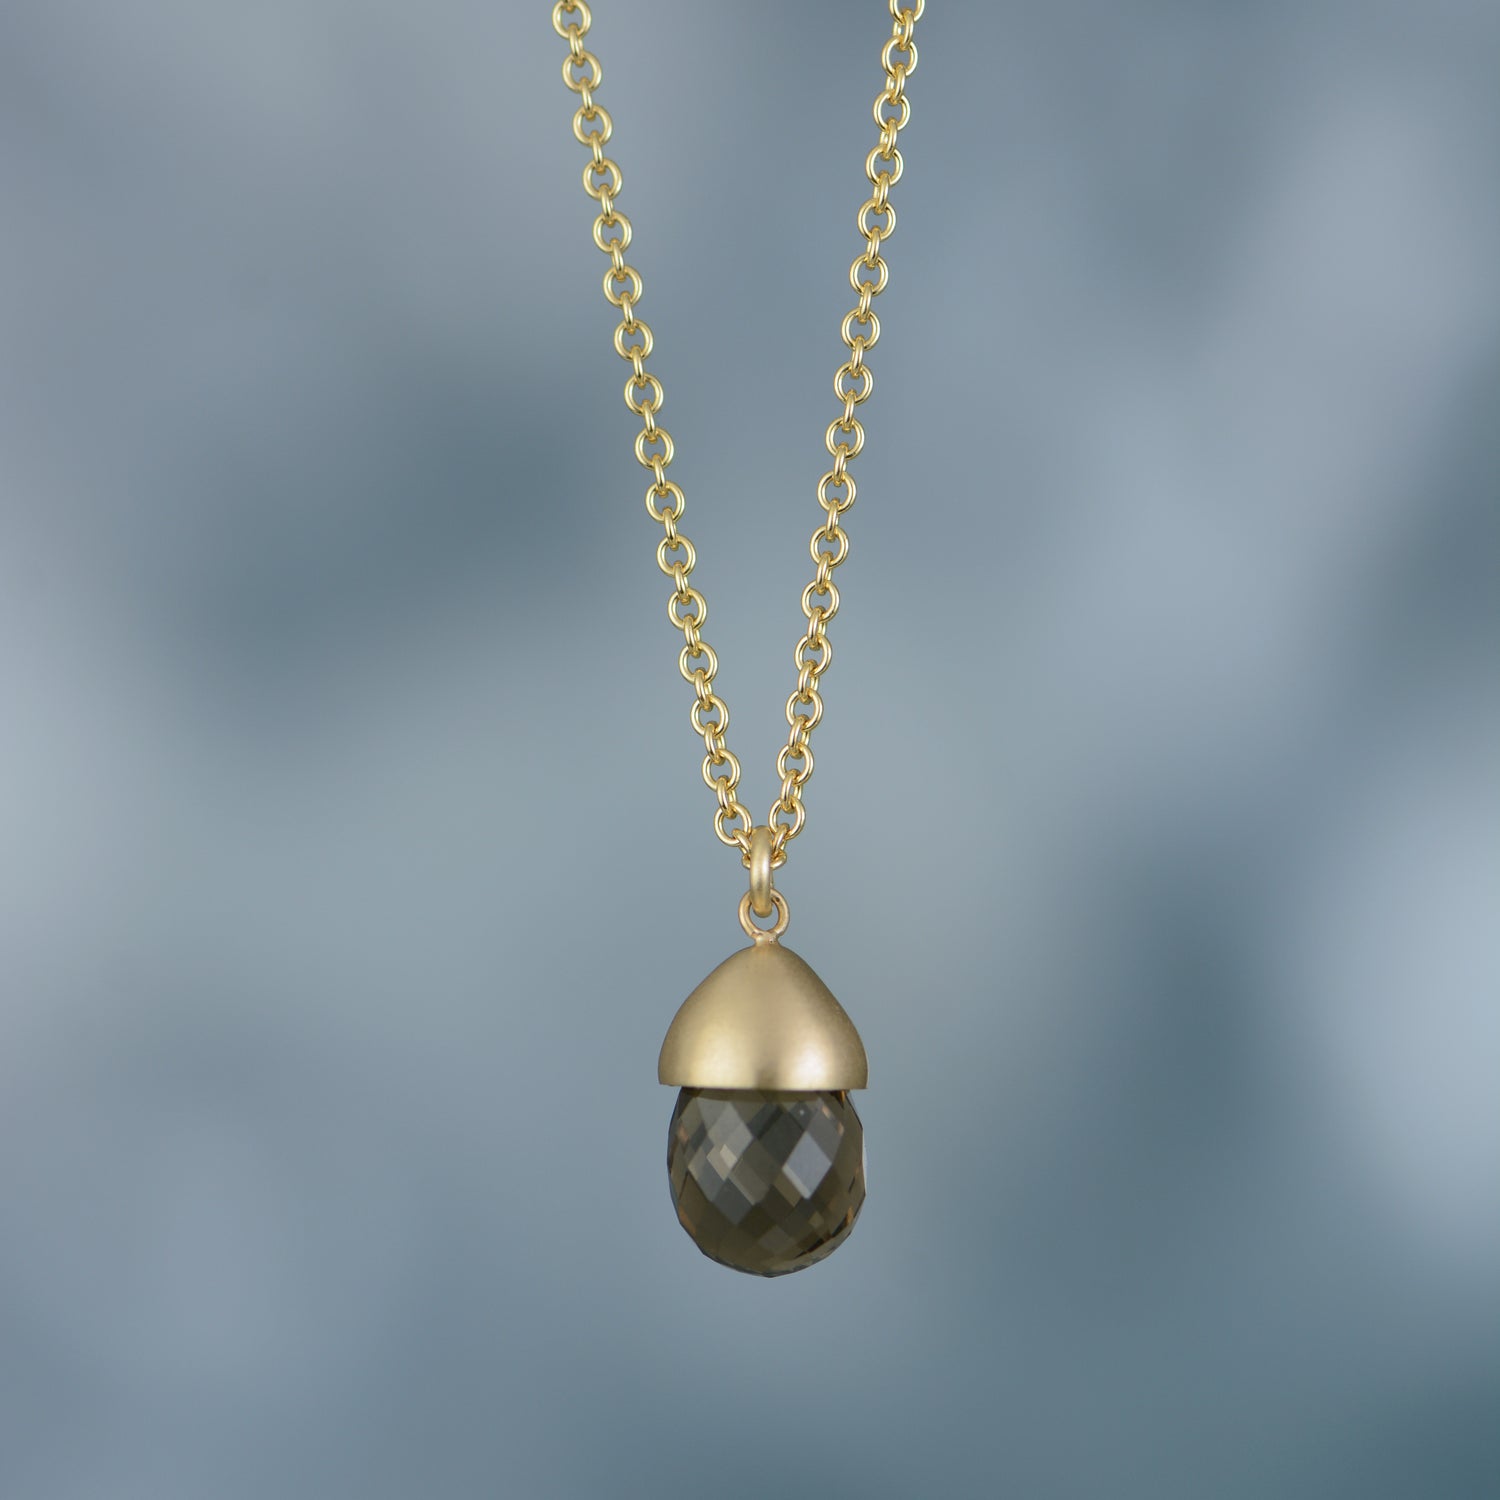 Gemstone Necklaces & Pendants